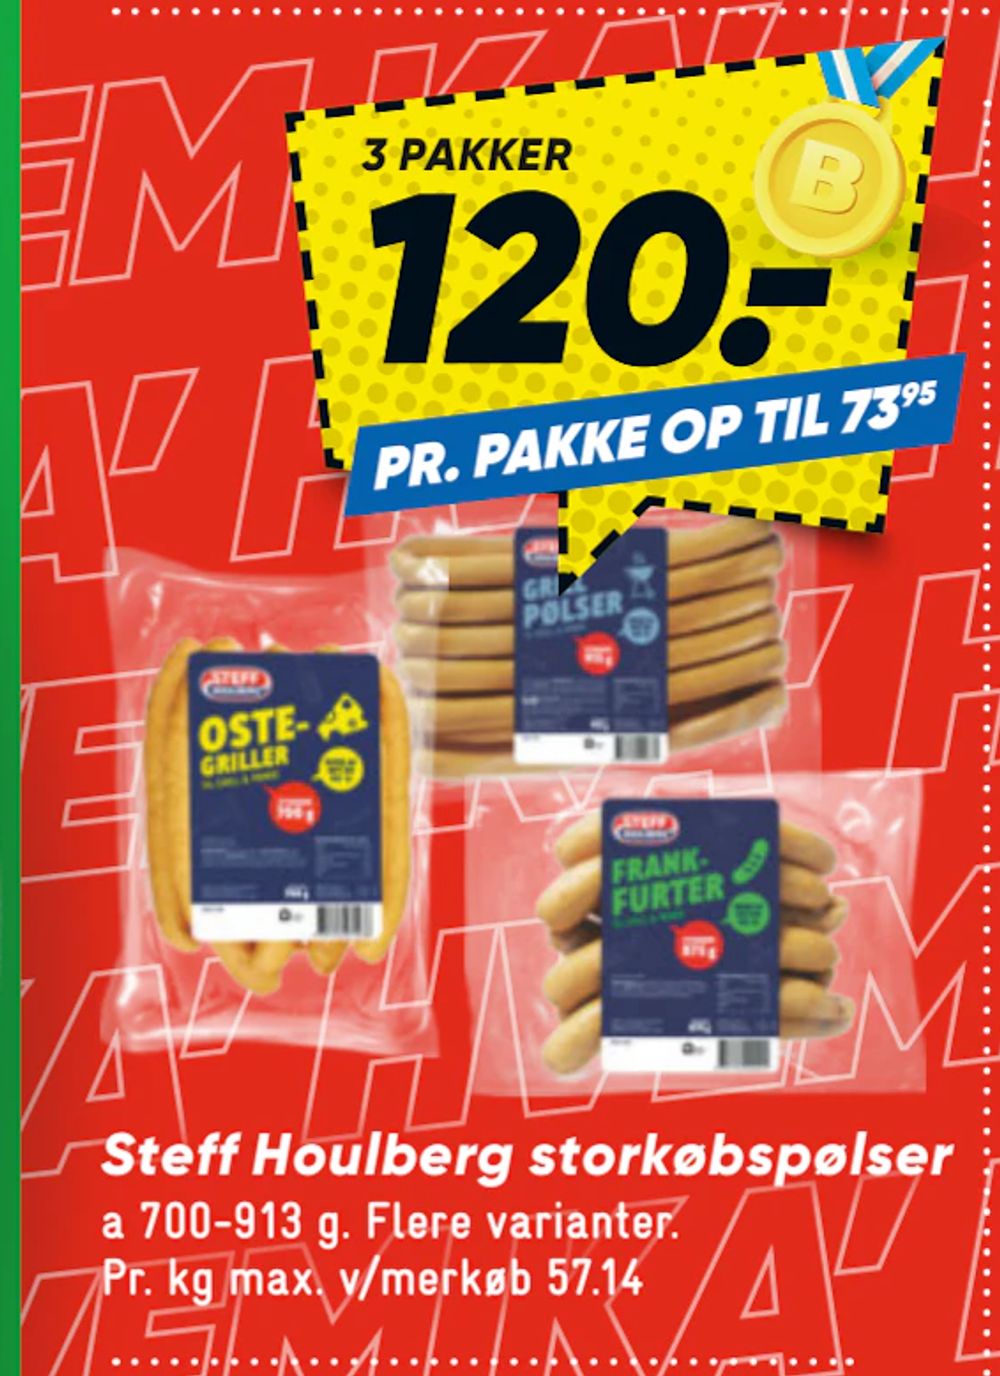 Tilbud på Steff Houlberg storkøbspølser fra Bilka til 120 kr.